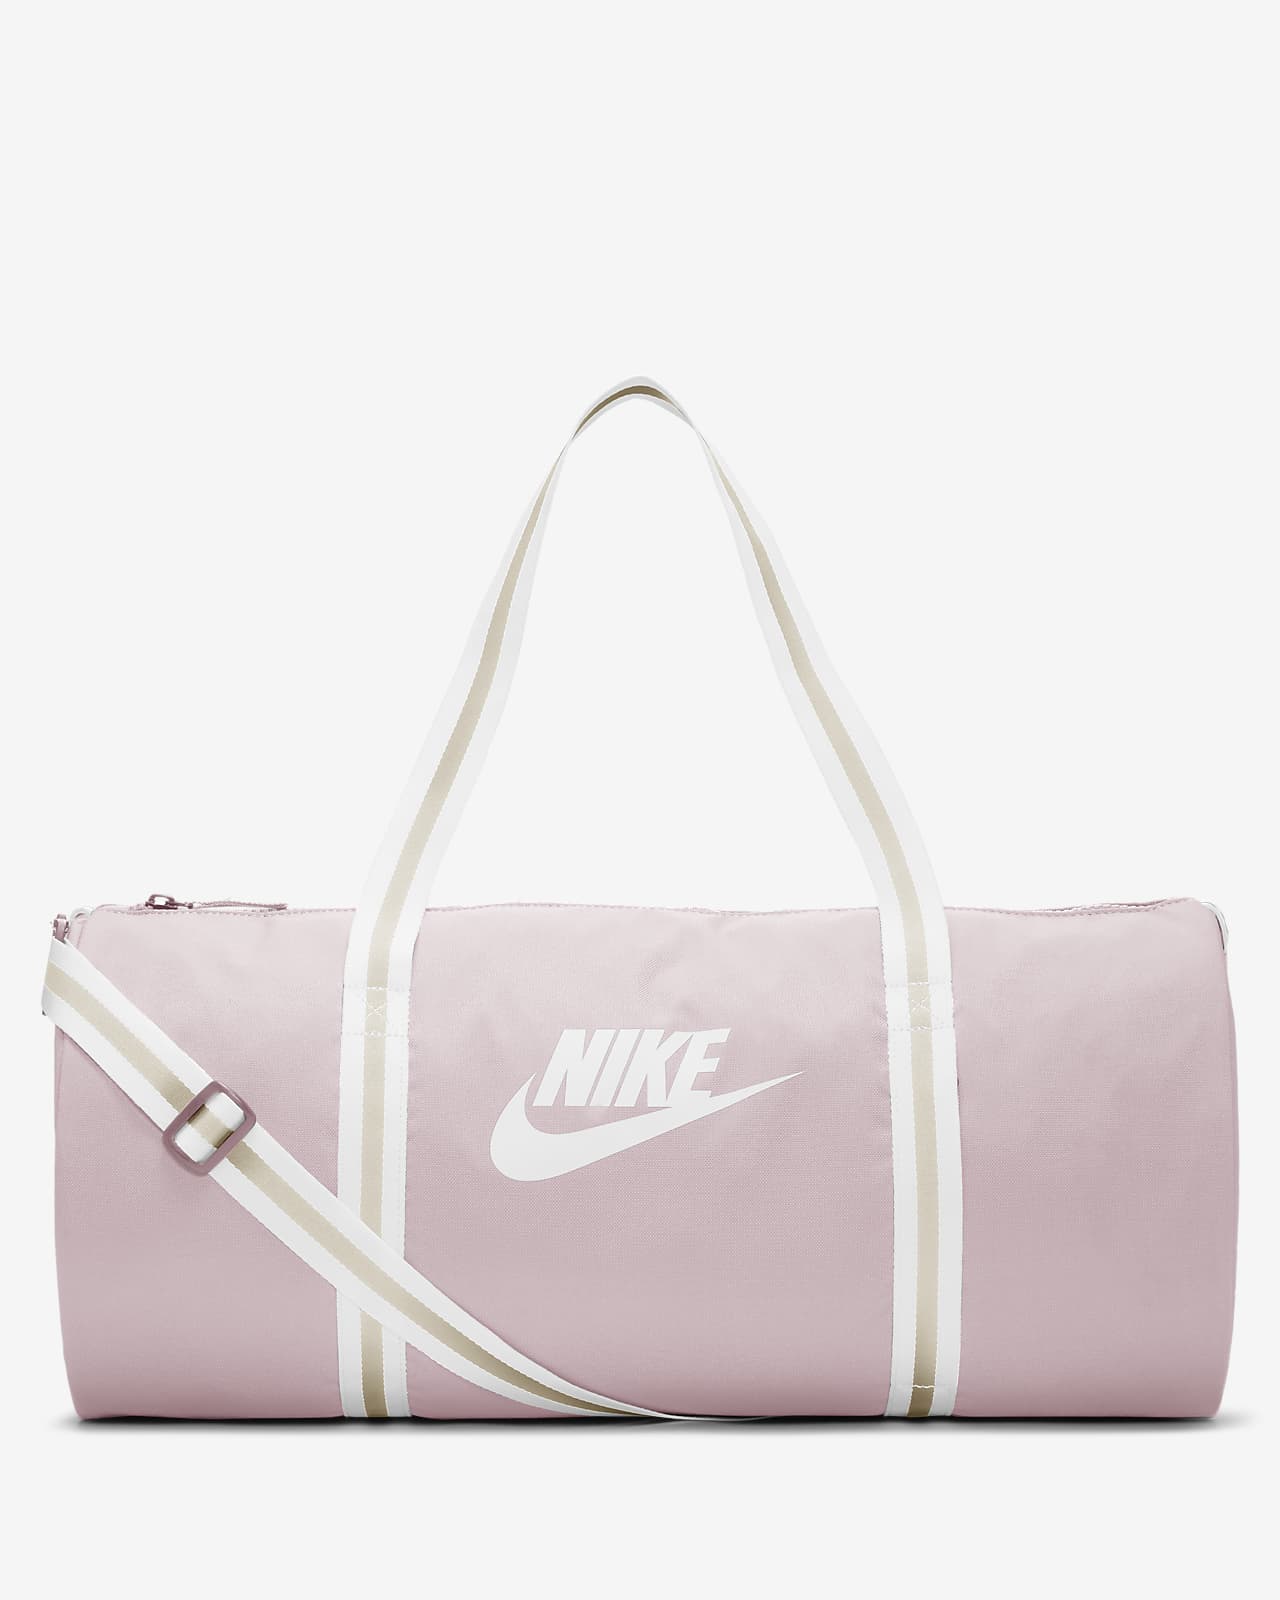 Nike Duffle Bag Pink Online, SAVE 58 